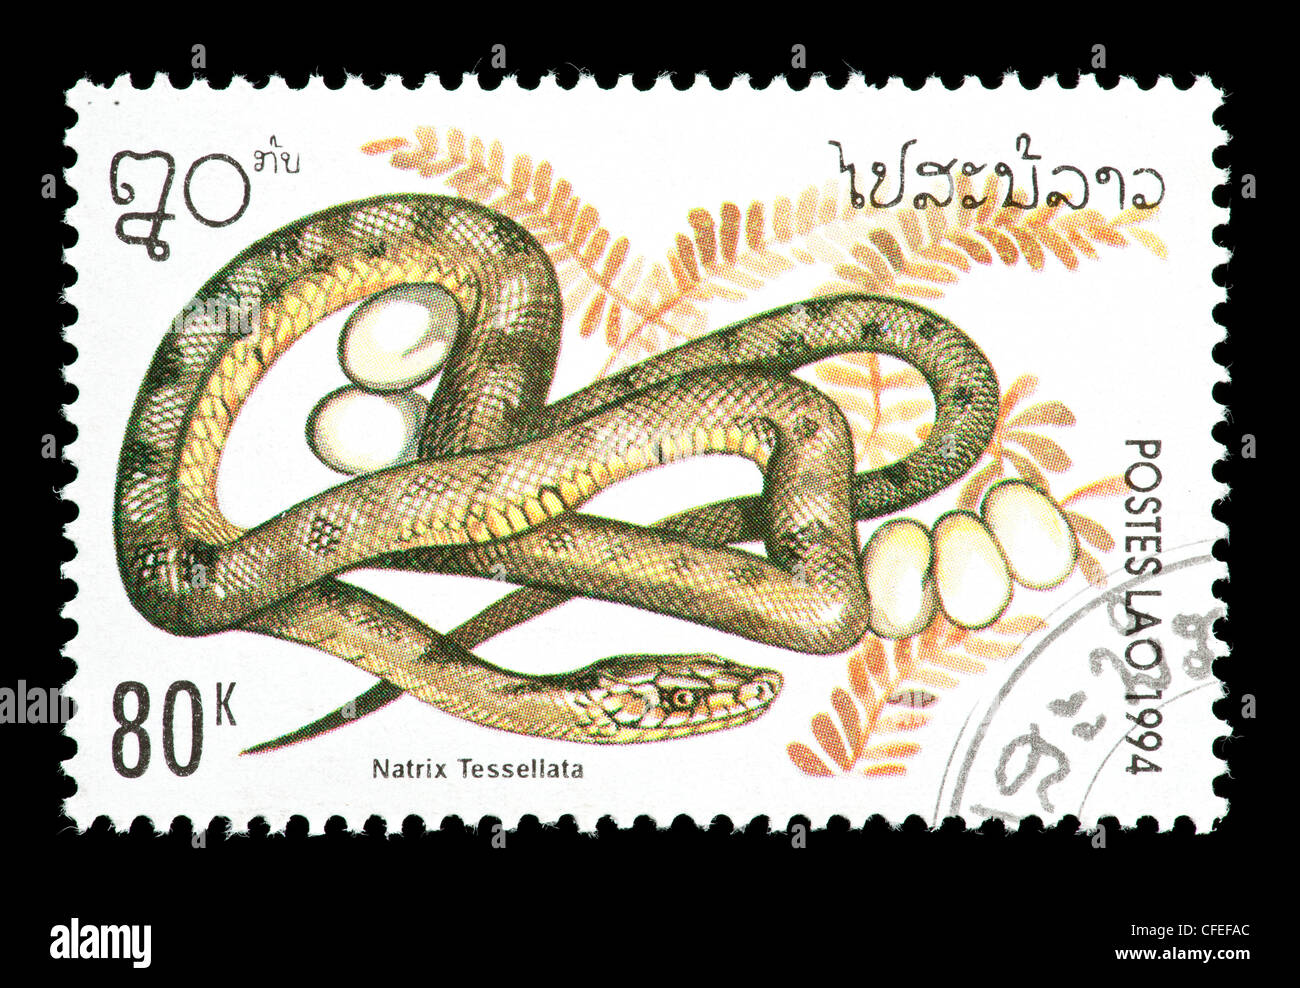 Timbre-poste du Laos représentant un serpent (Natrix tessellata dés) Banque D'Images